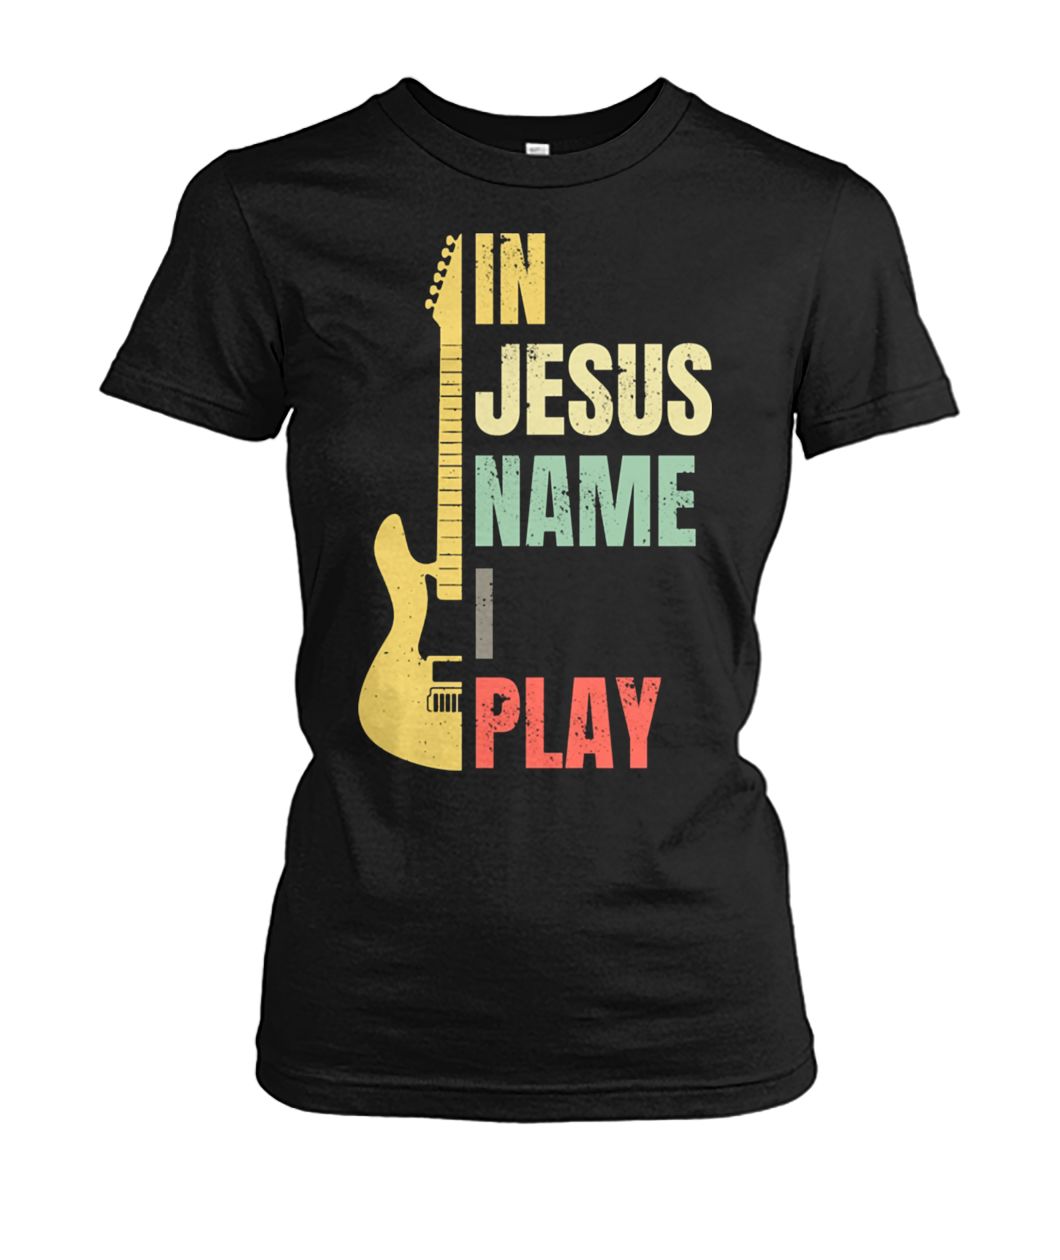 Vintage in Jesus name I play guitar women's crew tee